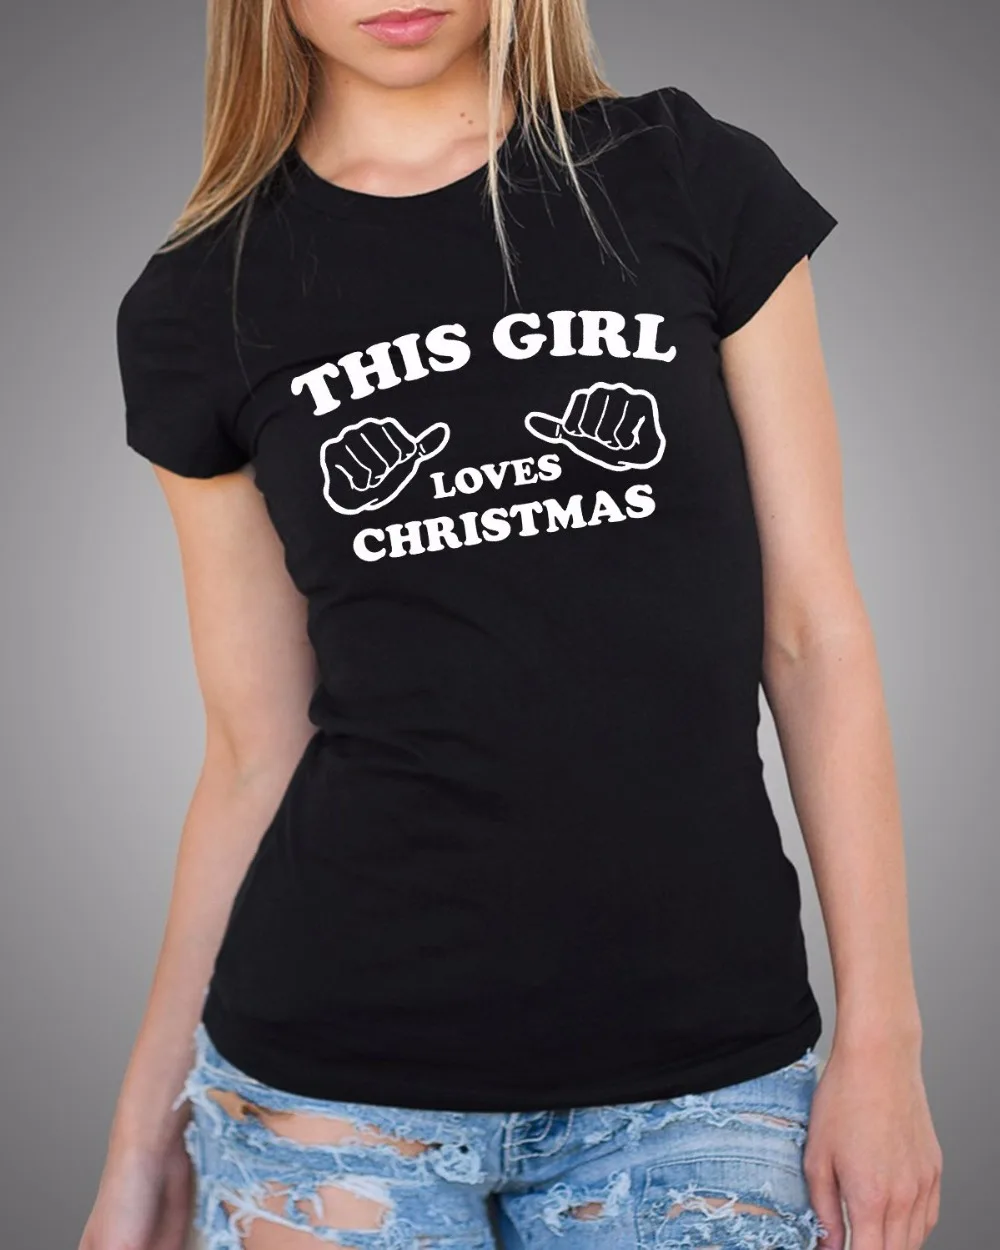 

This Girl Loves Christmas T Shirt Christmas Ladies Tee Xmas Woman slogan graphic funny grunge tumblr gift girl aesthetic art Top